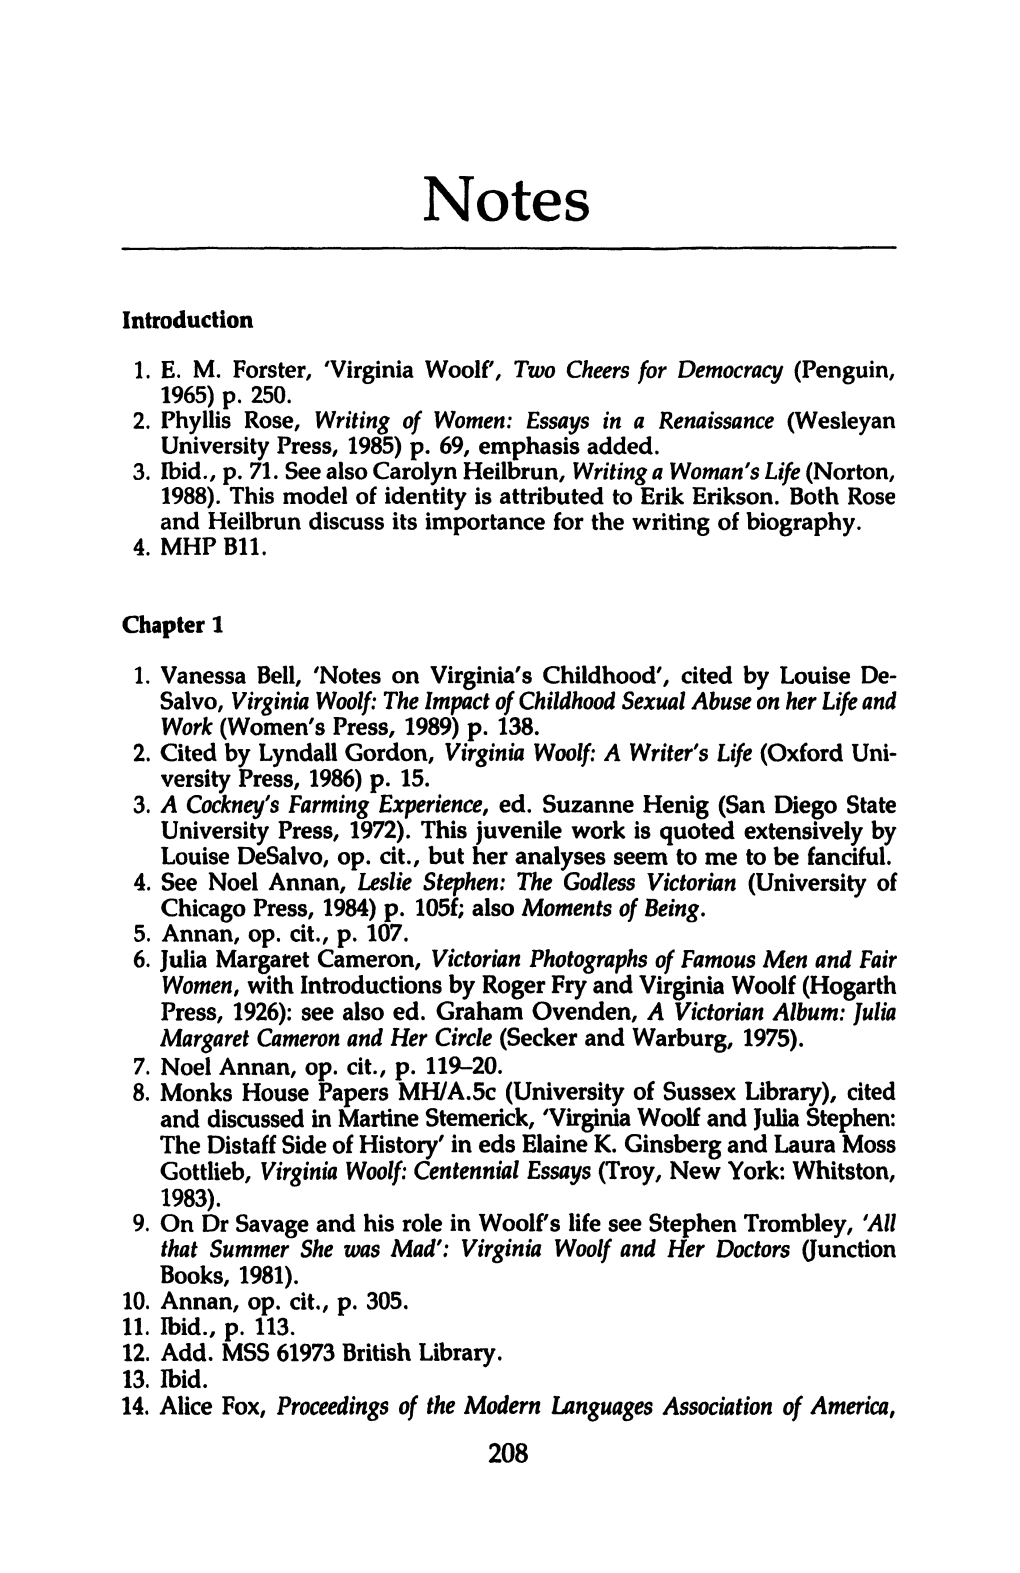 2. Phyllis Rose, Writing of Women: Essays in a Renaissance (Wesleyan University Press, 1985) P